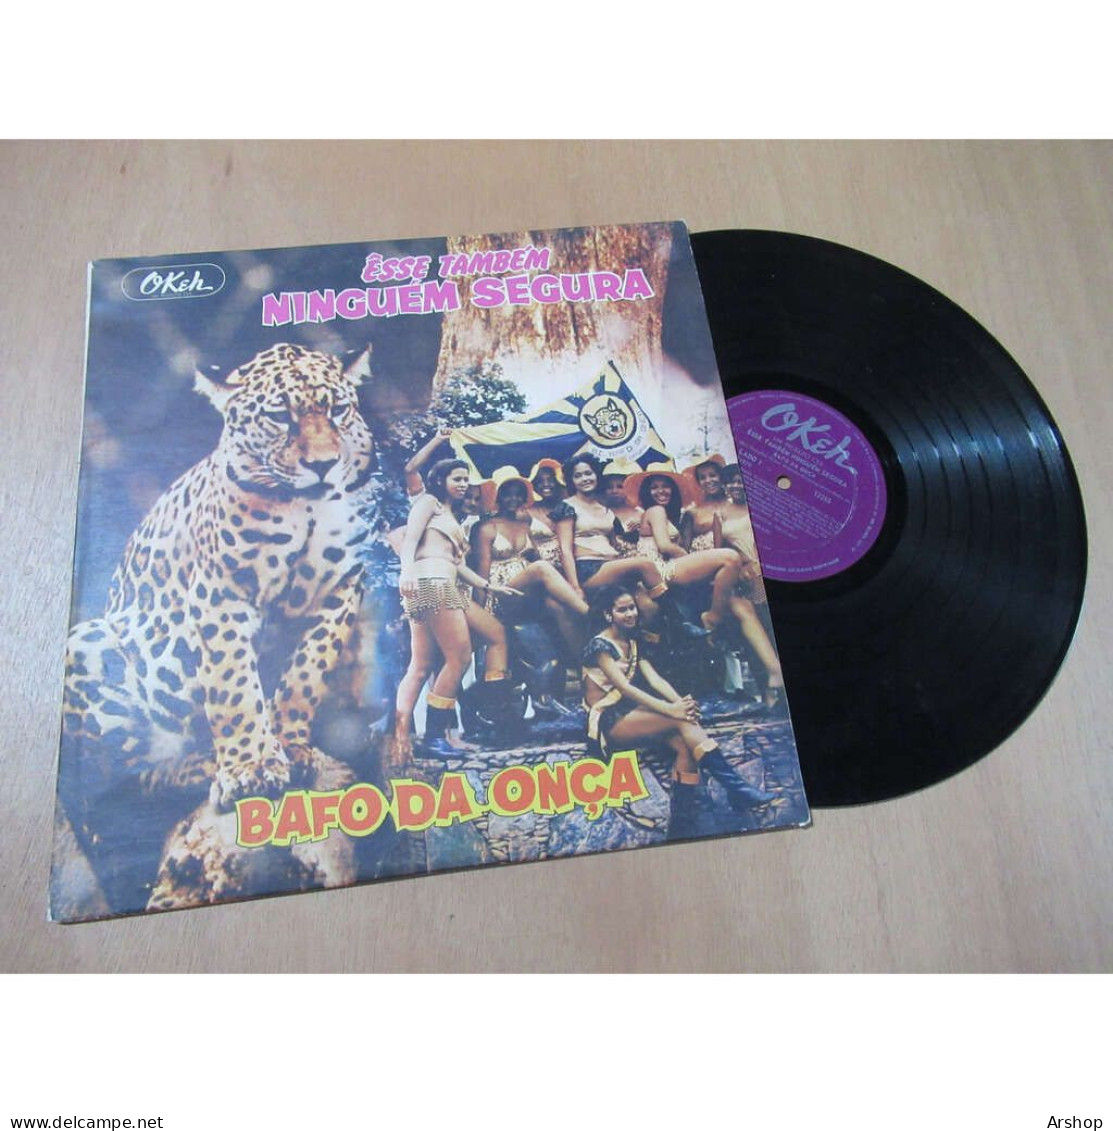 BAFO DA ONCA Esse Tambem Ninguem Segura -  LATIN SAMBA - OKEH Lp BRESIL 1970 - World Music